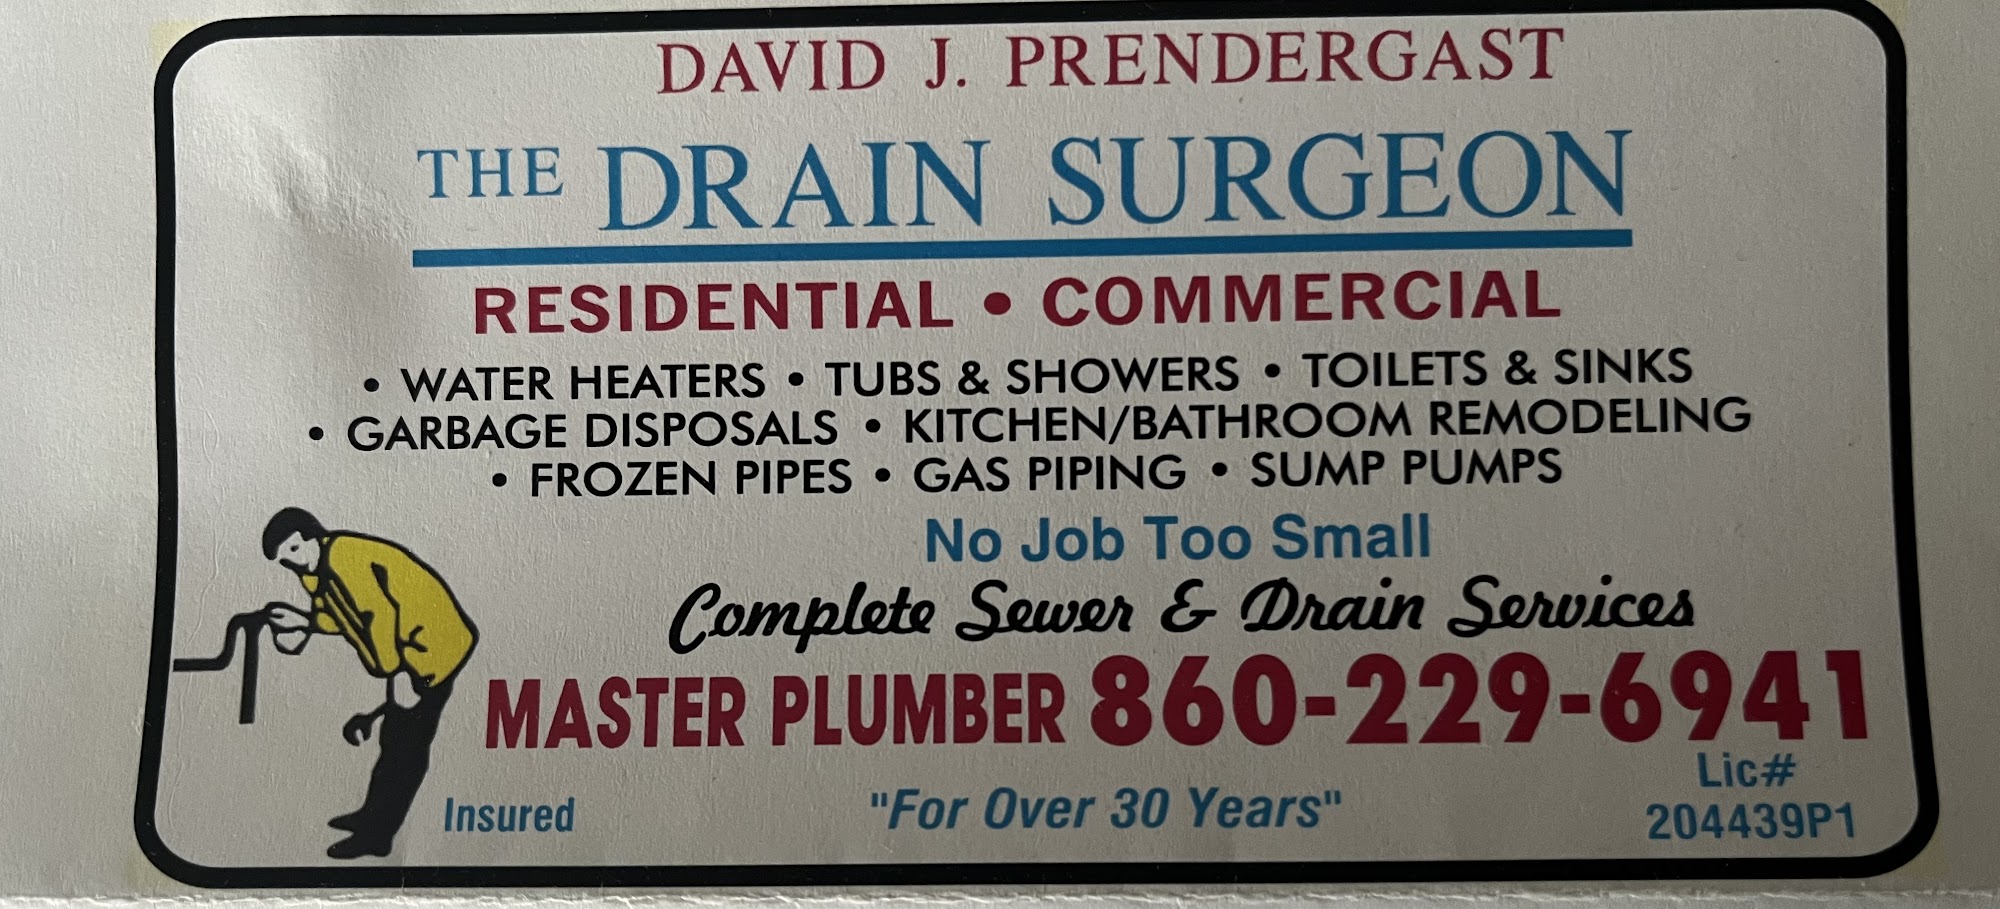 Prendergast David J. The Drain Surgeon